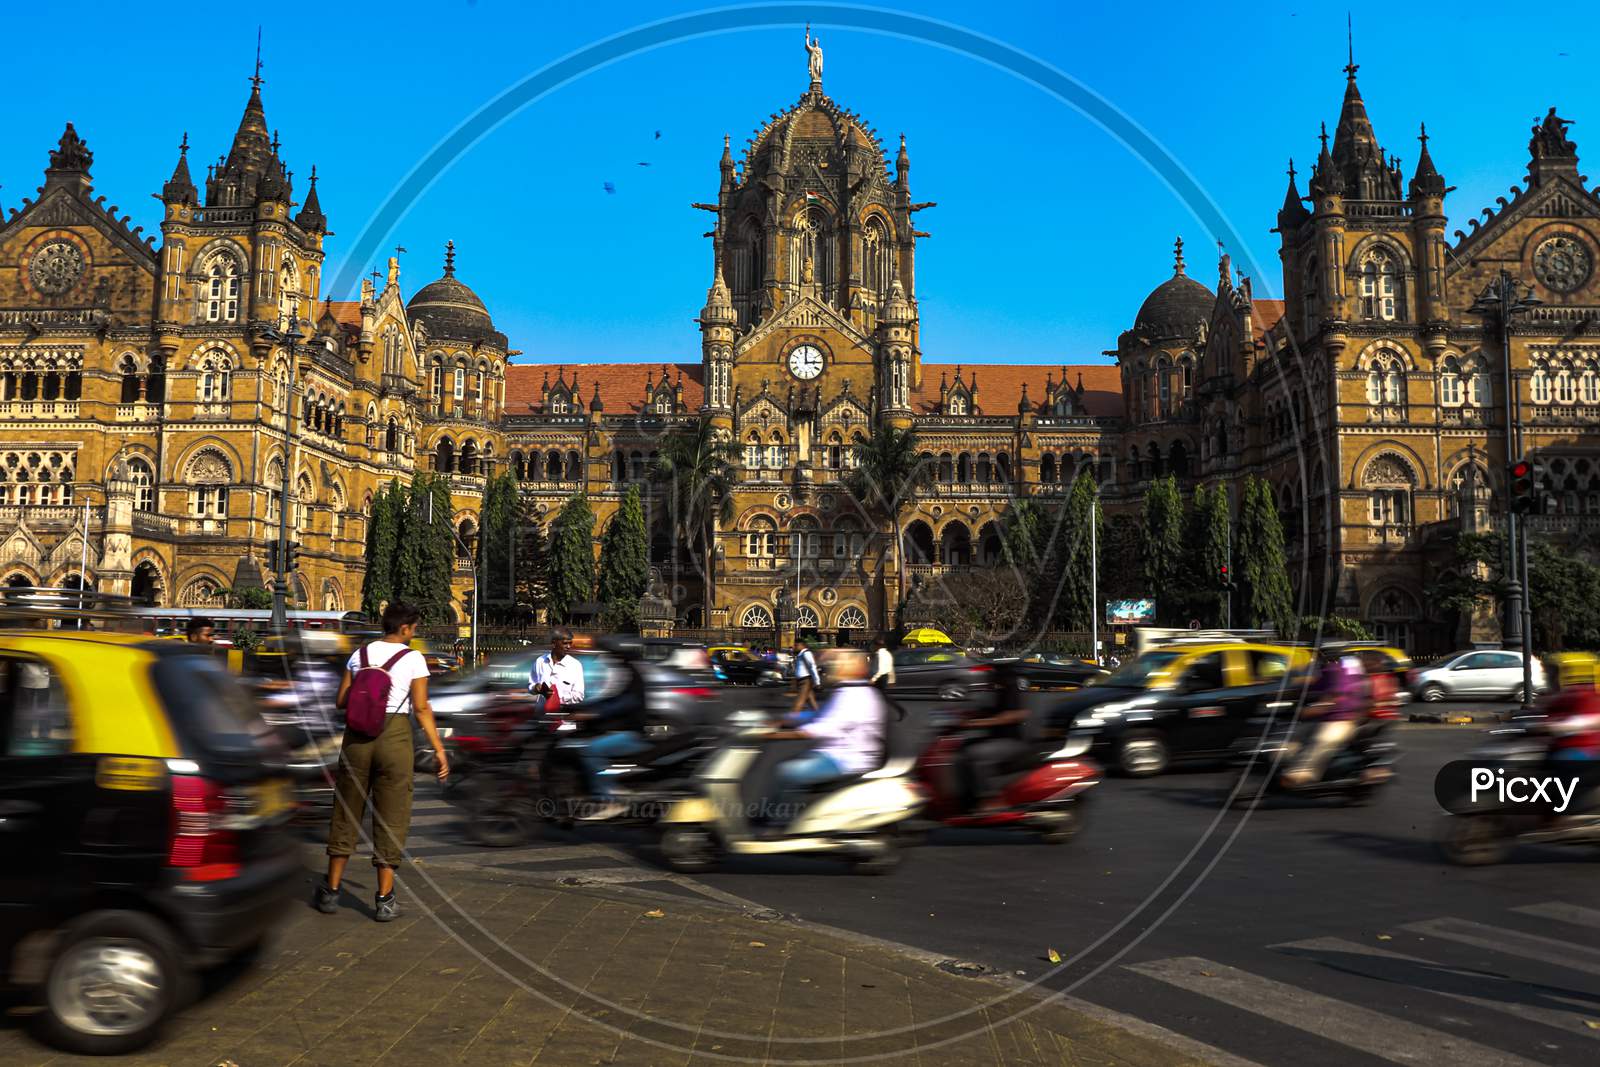 Mumbai chattrapathi shivaji maharaj terminus